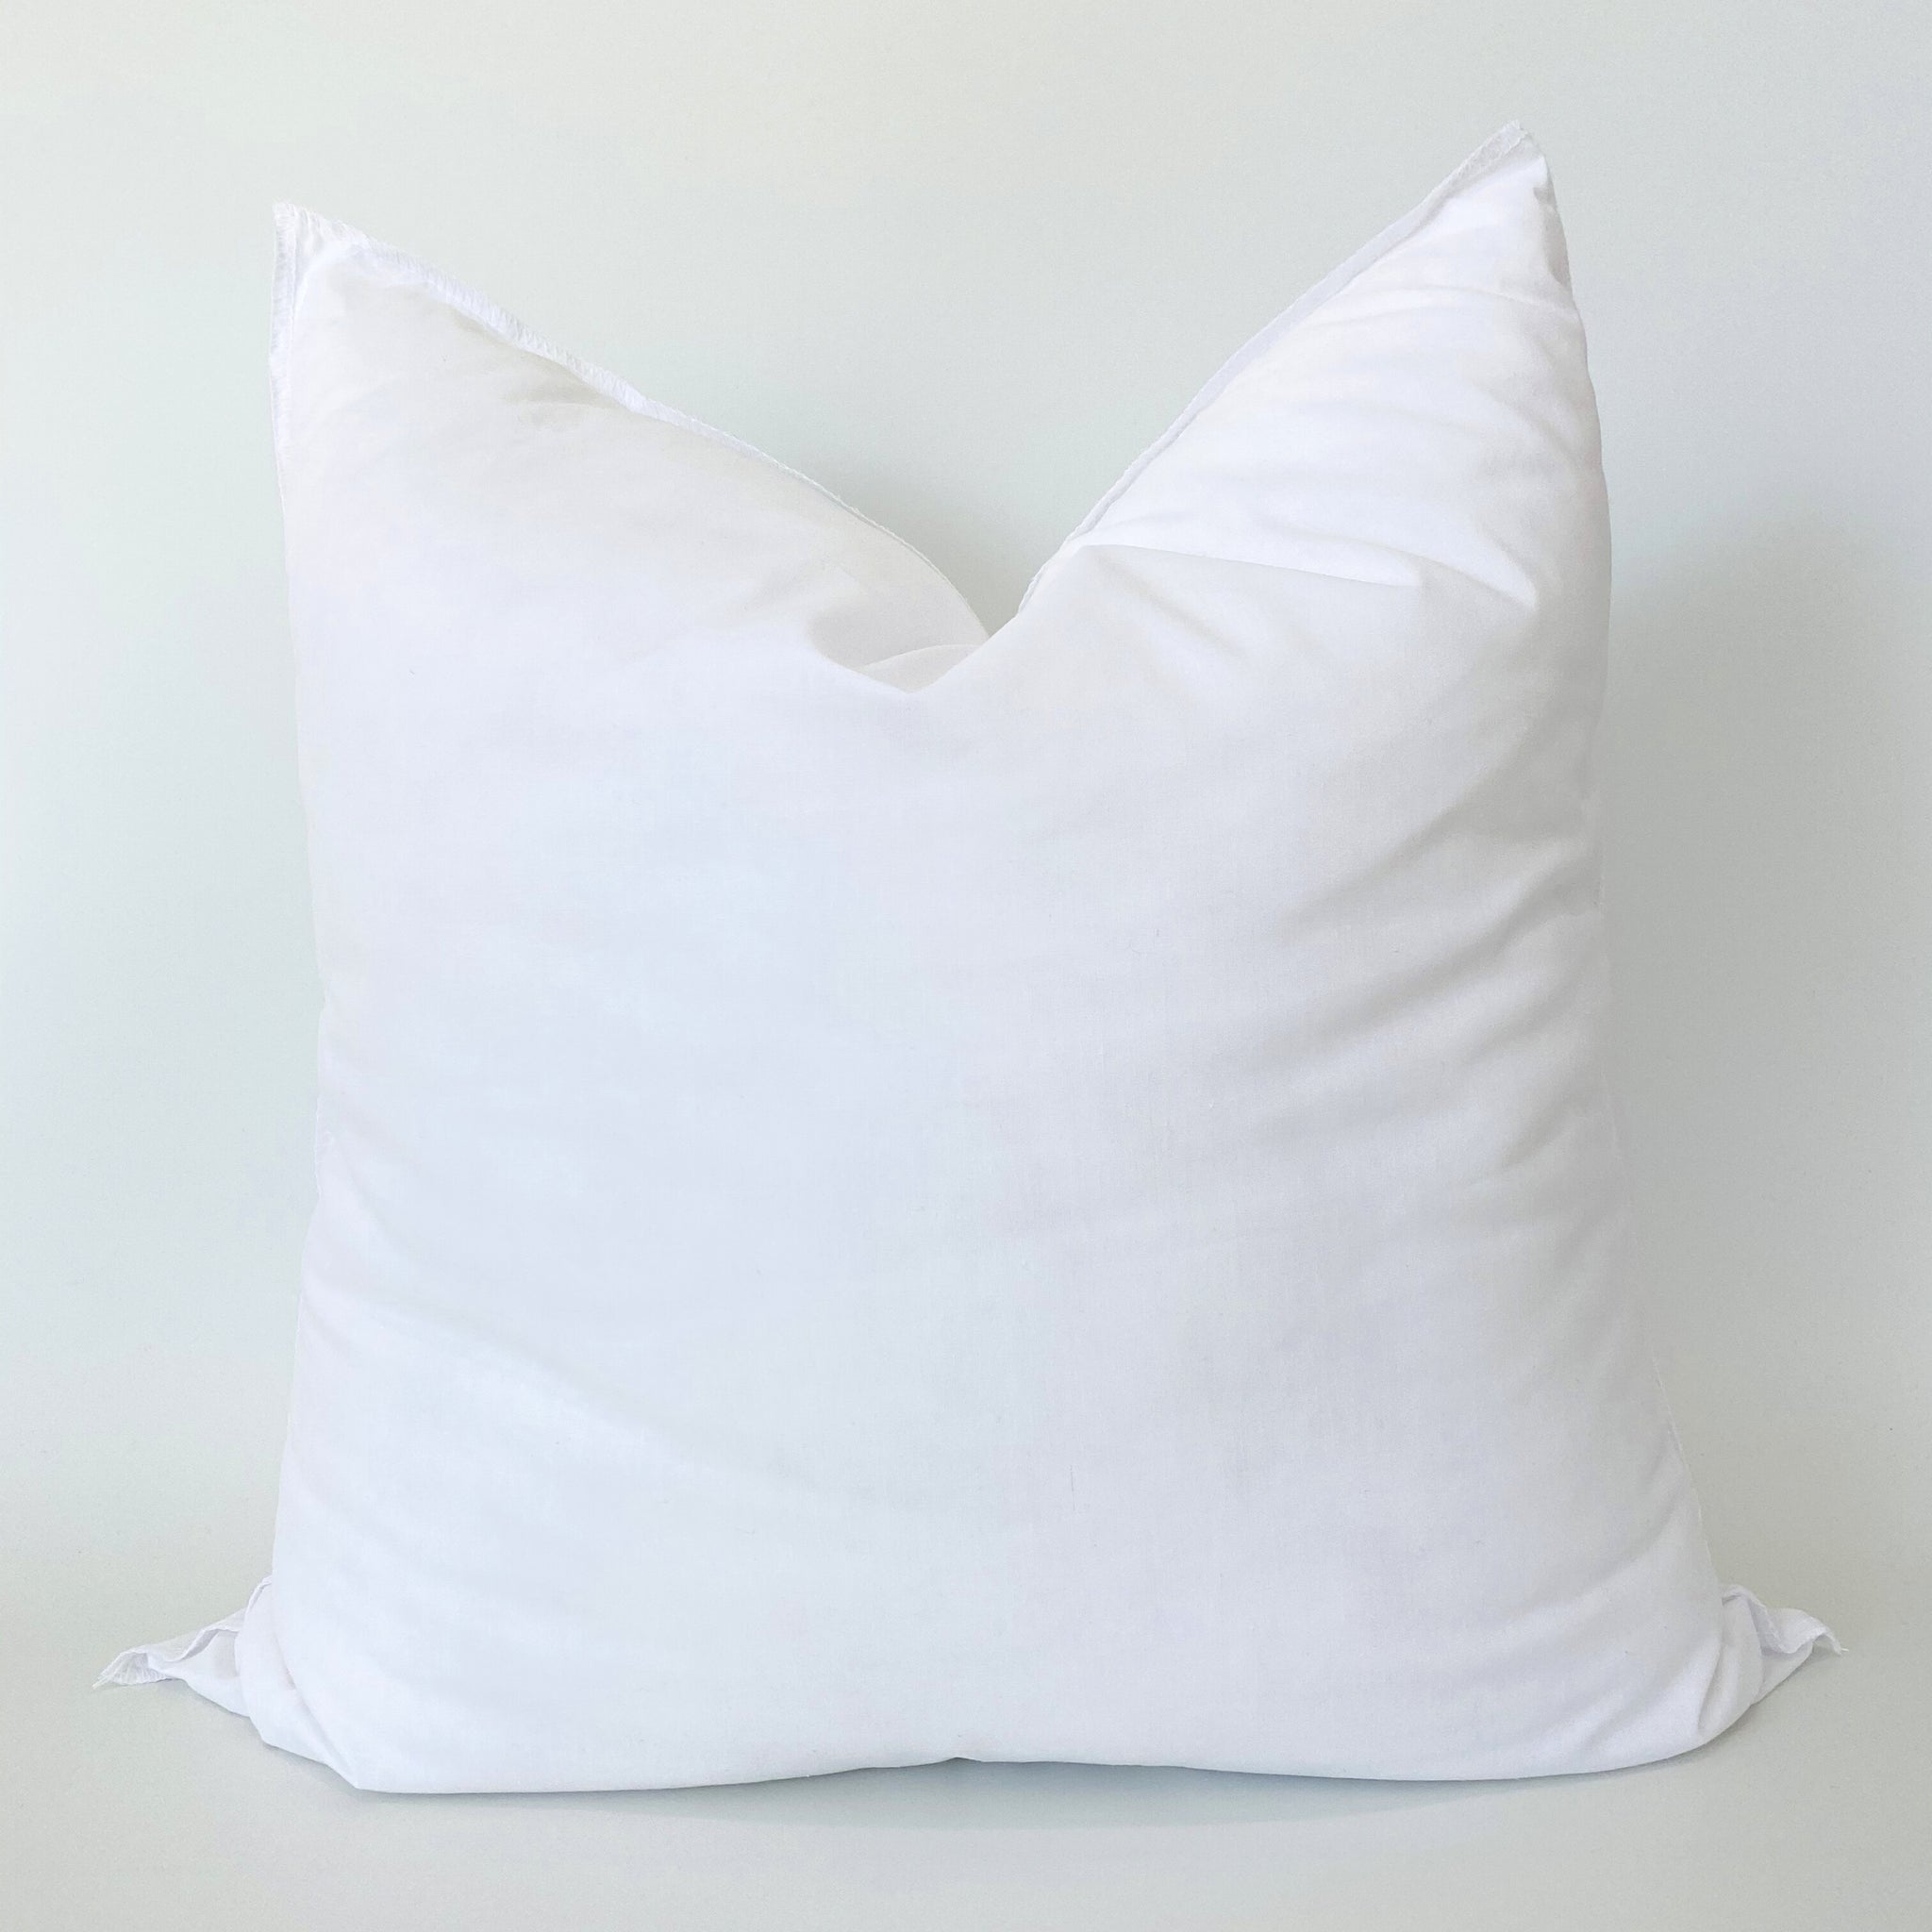 14 x 26 Feather/Down Lumbar Pillow Insert – Grae Studio Design